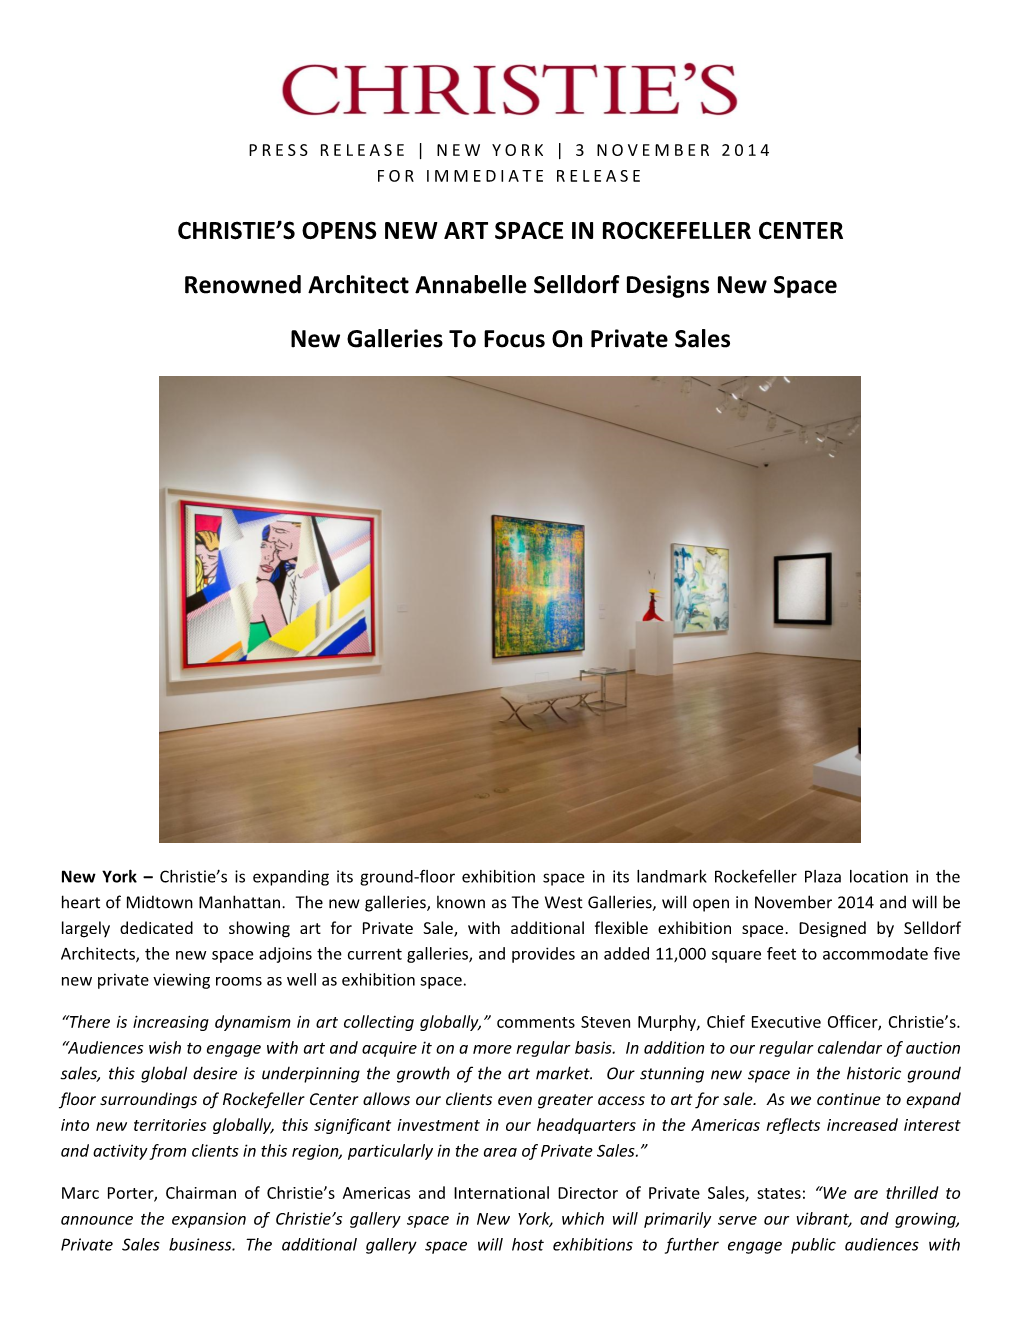 Christie's Opens New Art Space in Rockefeller